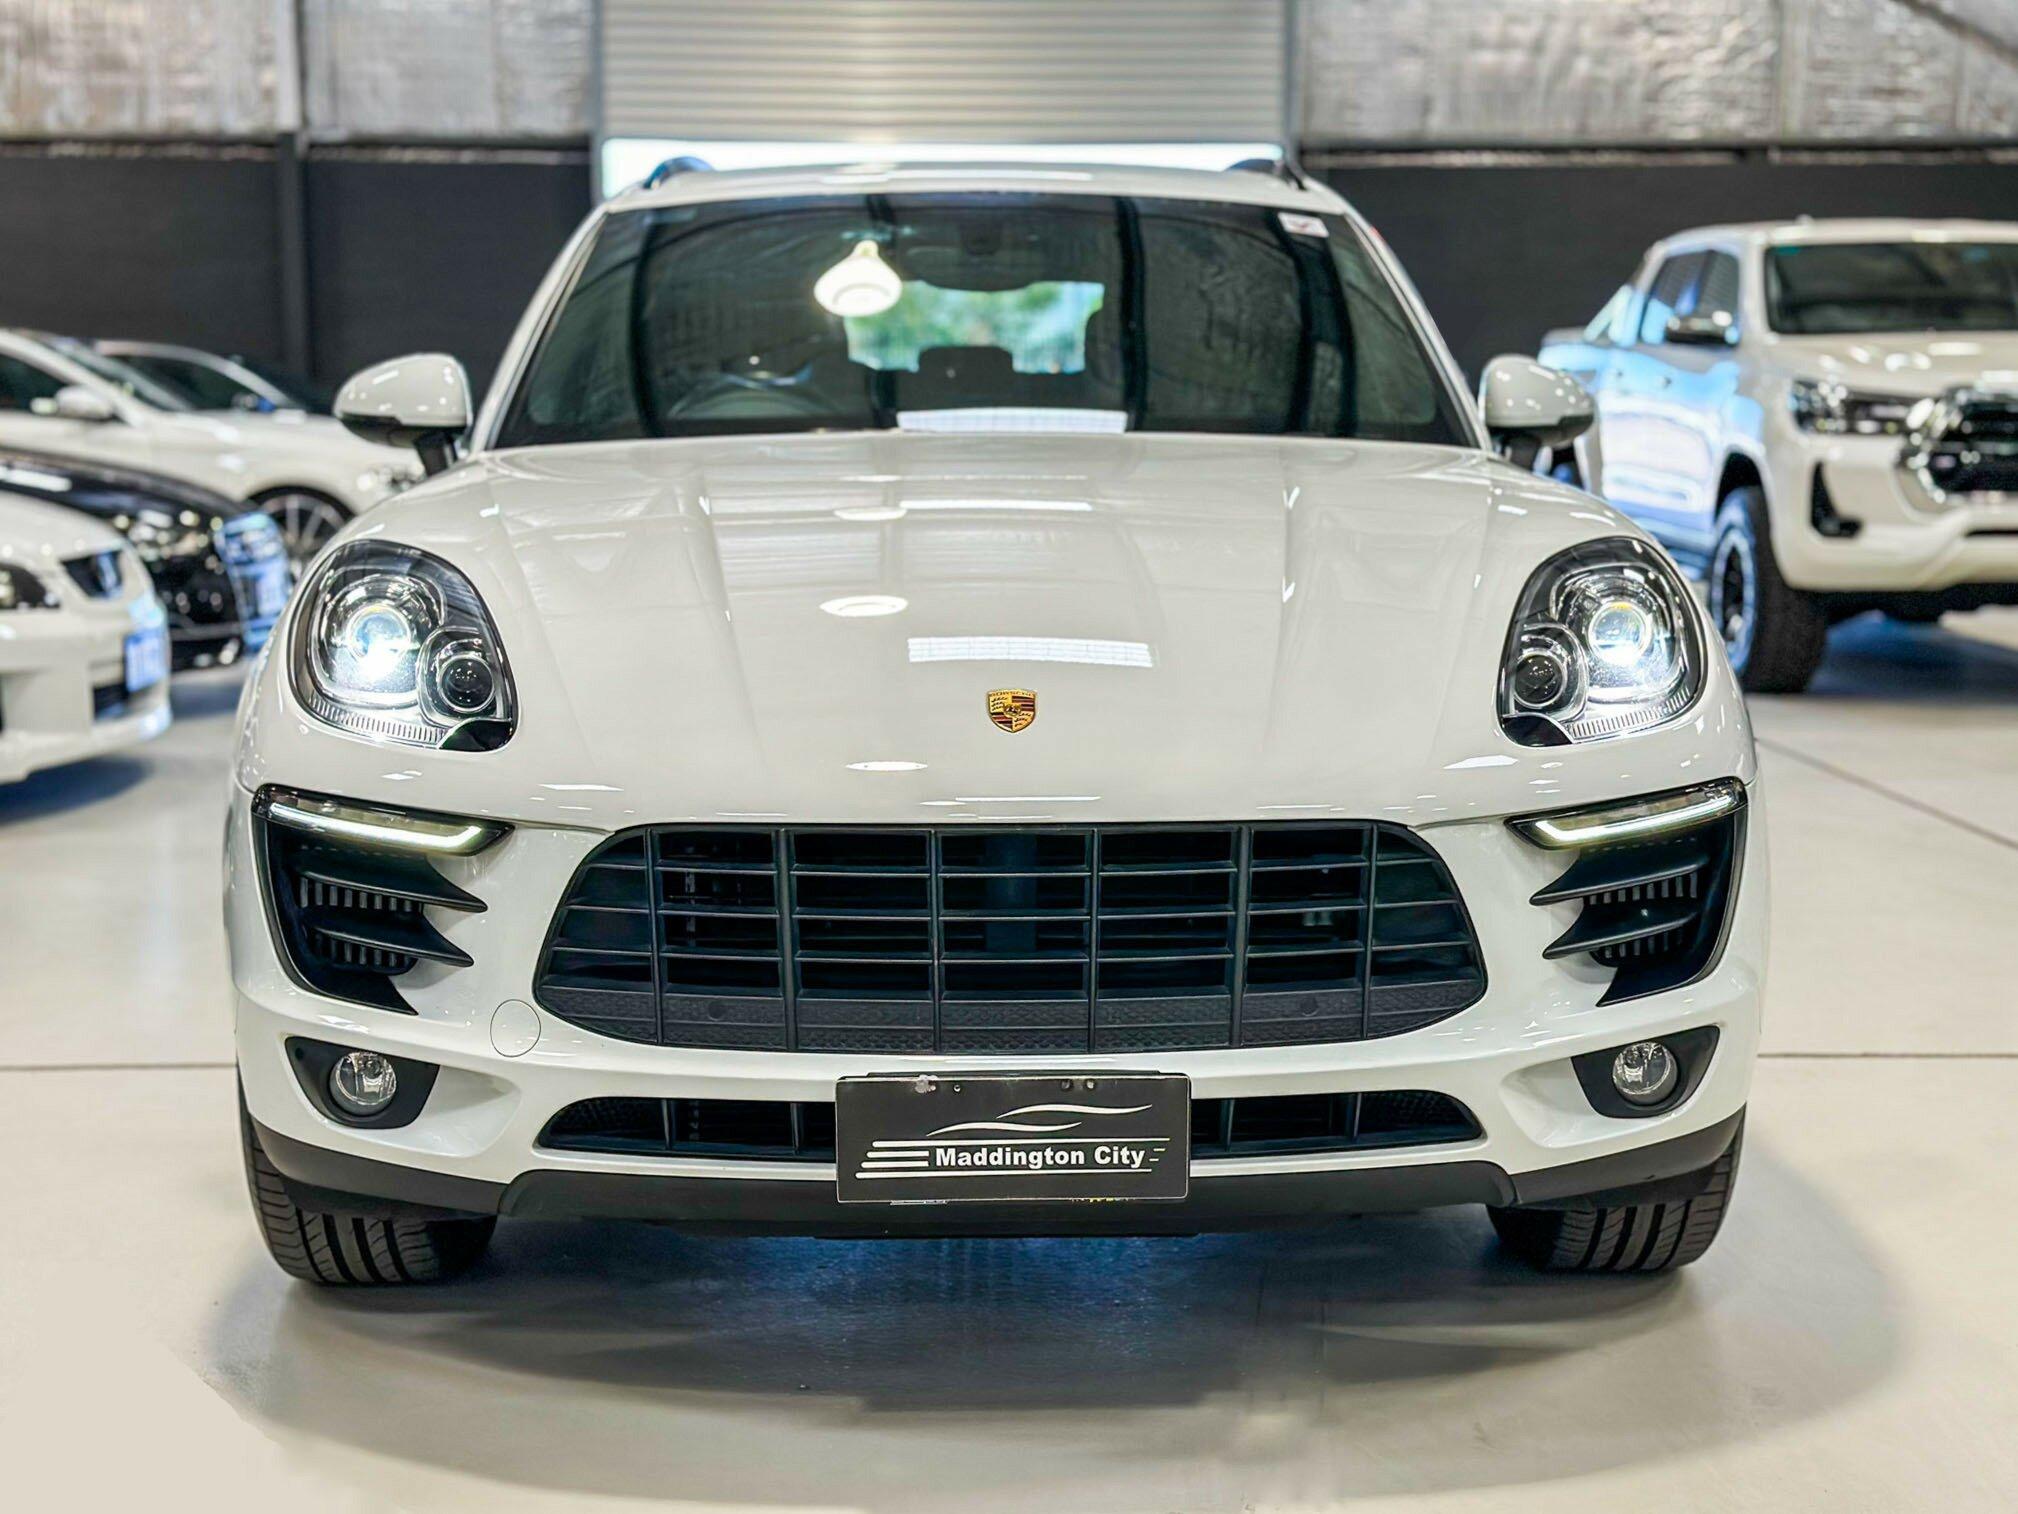 Porsche Macan image 2